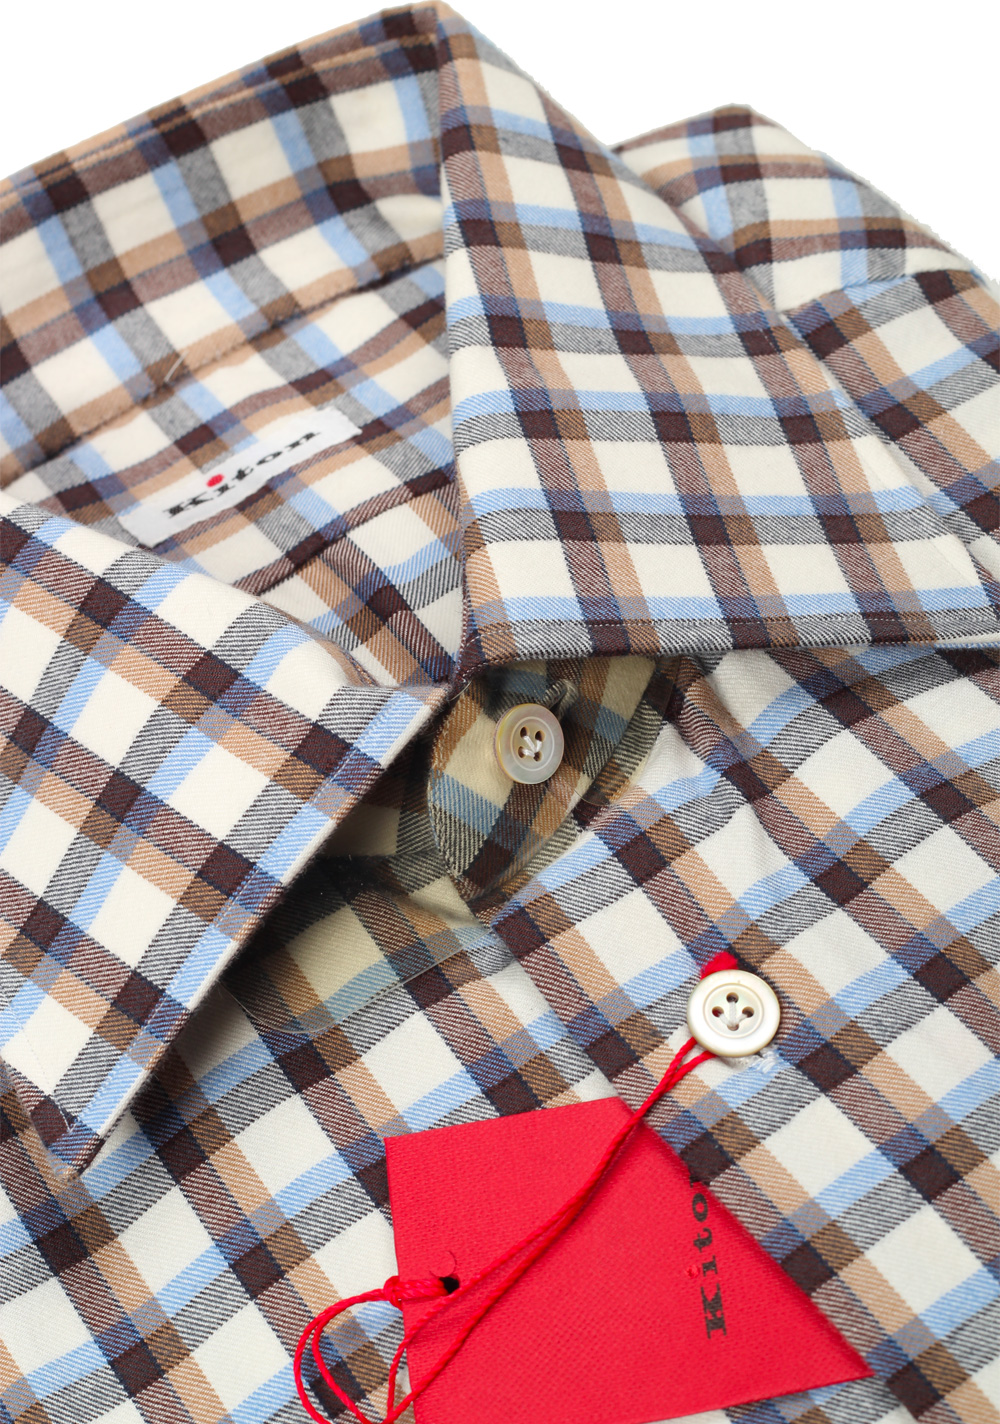 Kiton Checked Flannel Shirt 44 / 17,5 U.S. | Costume Limité